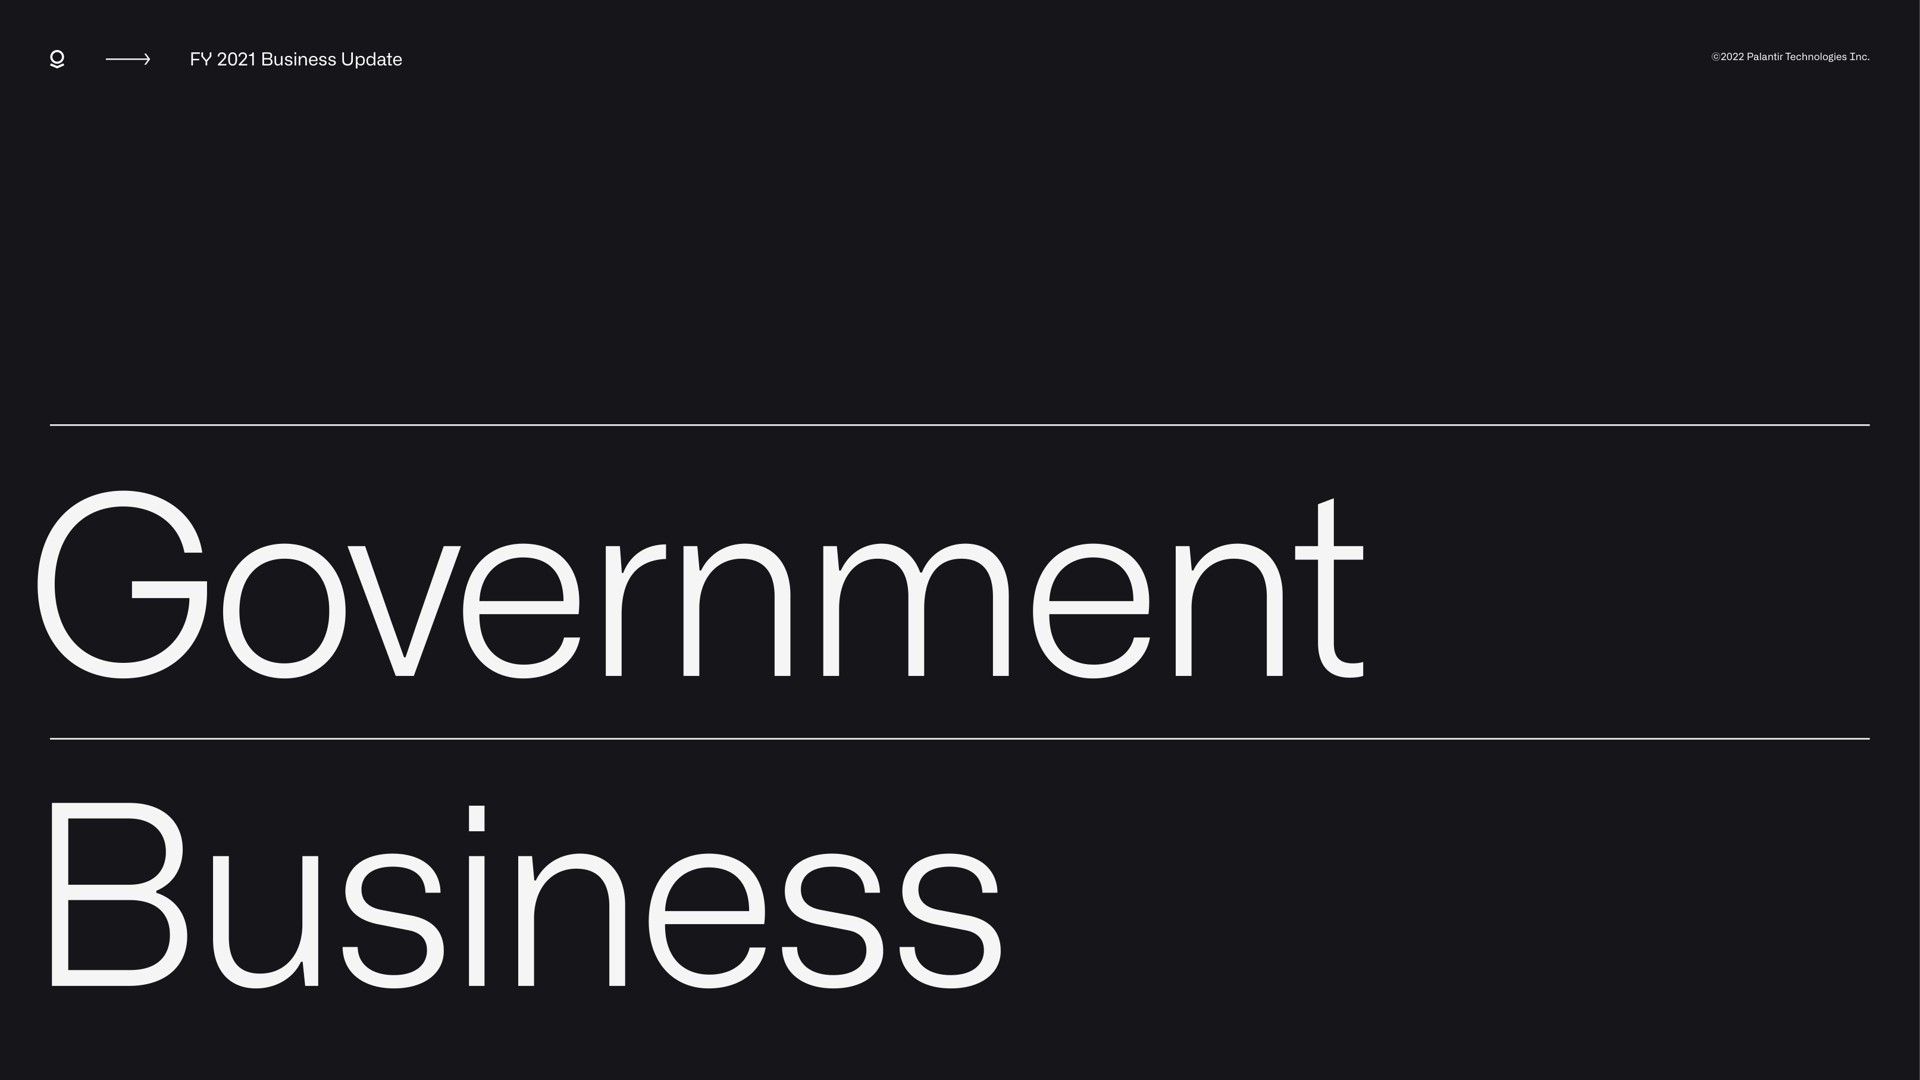 business update government business | Palantir